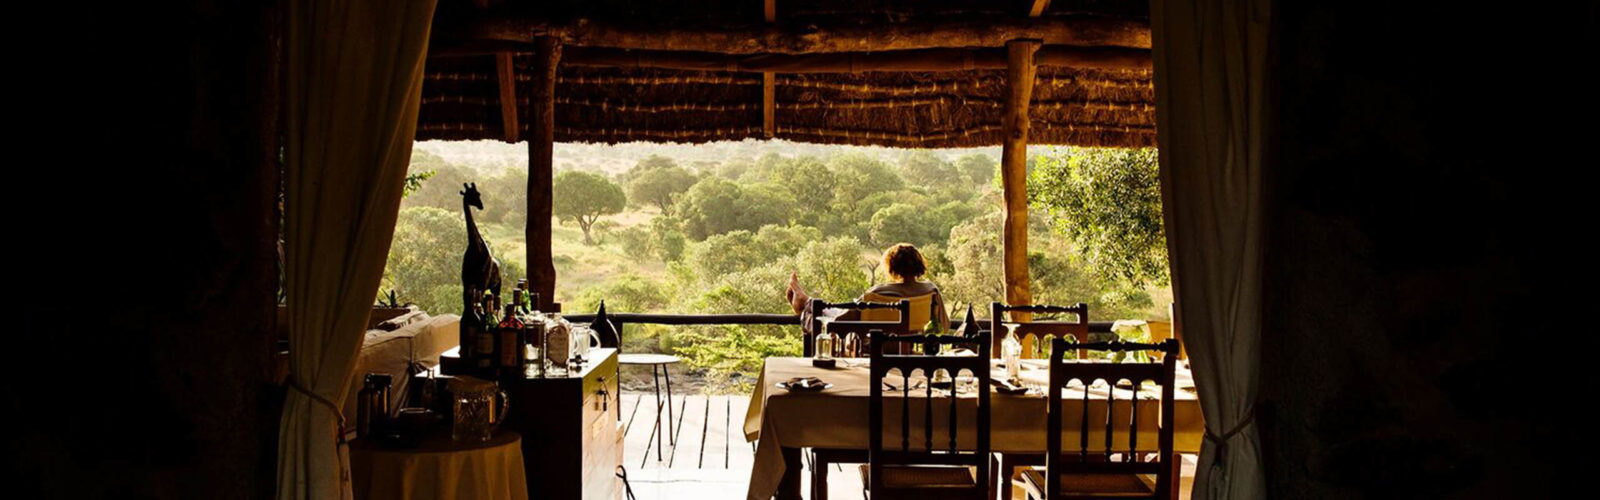 Restaurant, Serian Camp The Nest, Mara Conservancies, Kenya